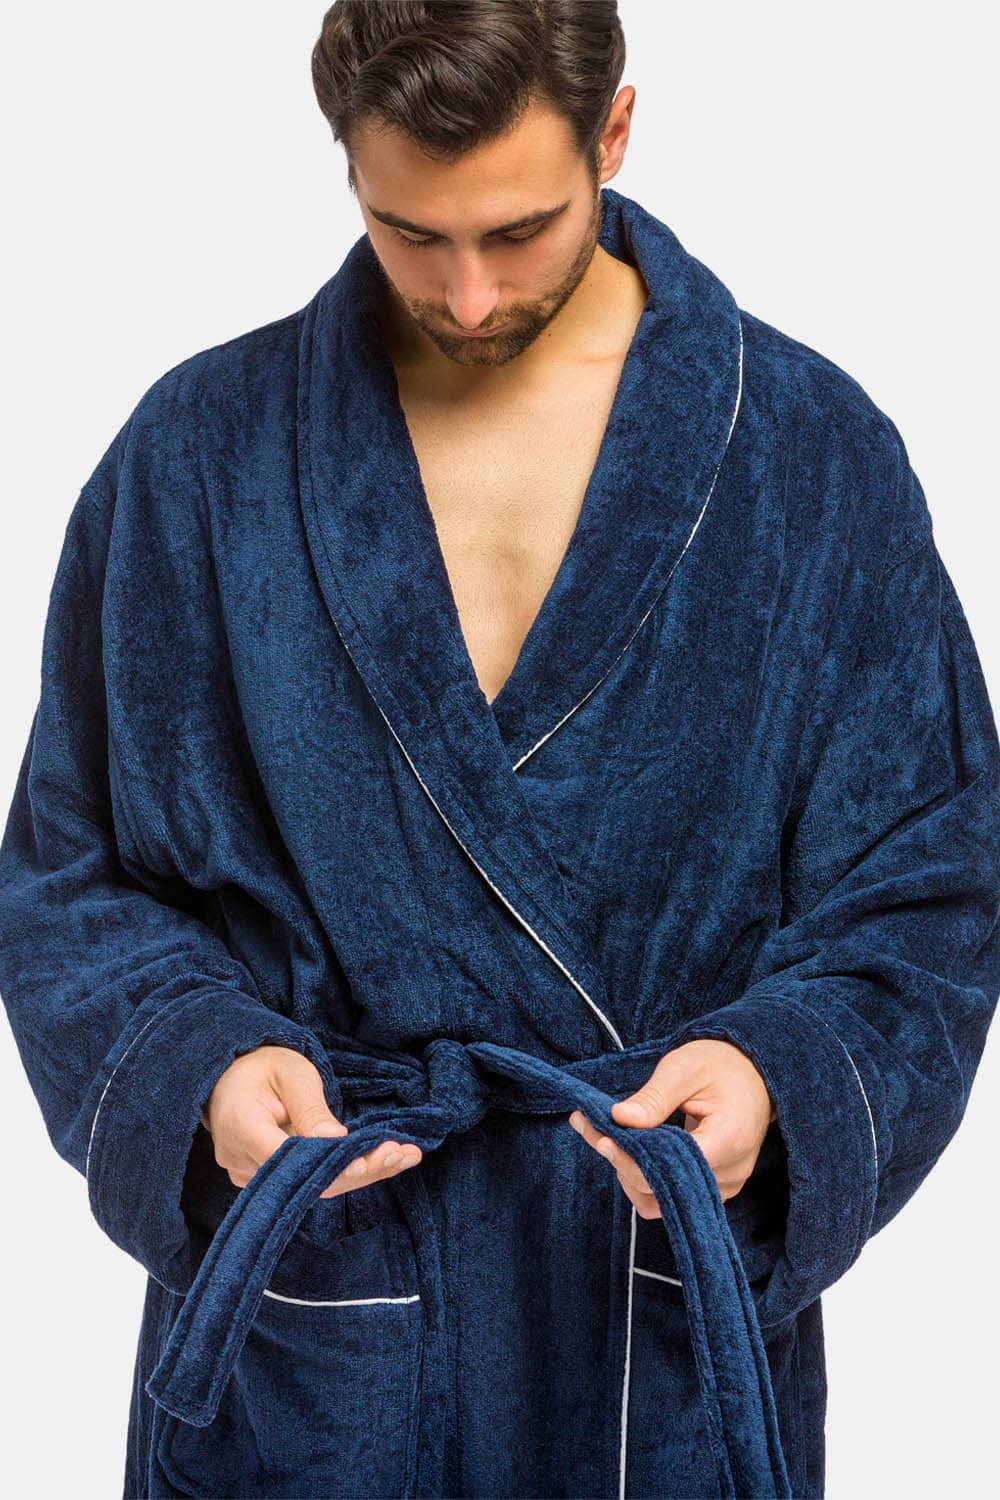 Men's Premier Turkish-Style Full Length Terry Cloth Spa Robe Mens>Sleepwear>Robe Fishers Finery 